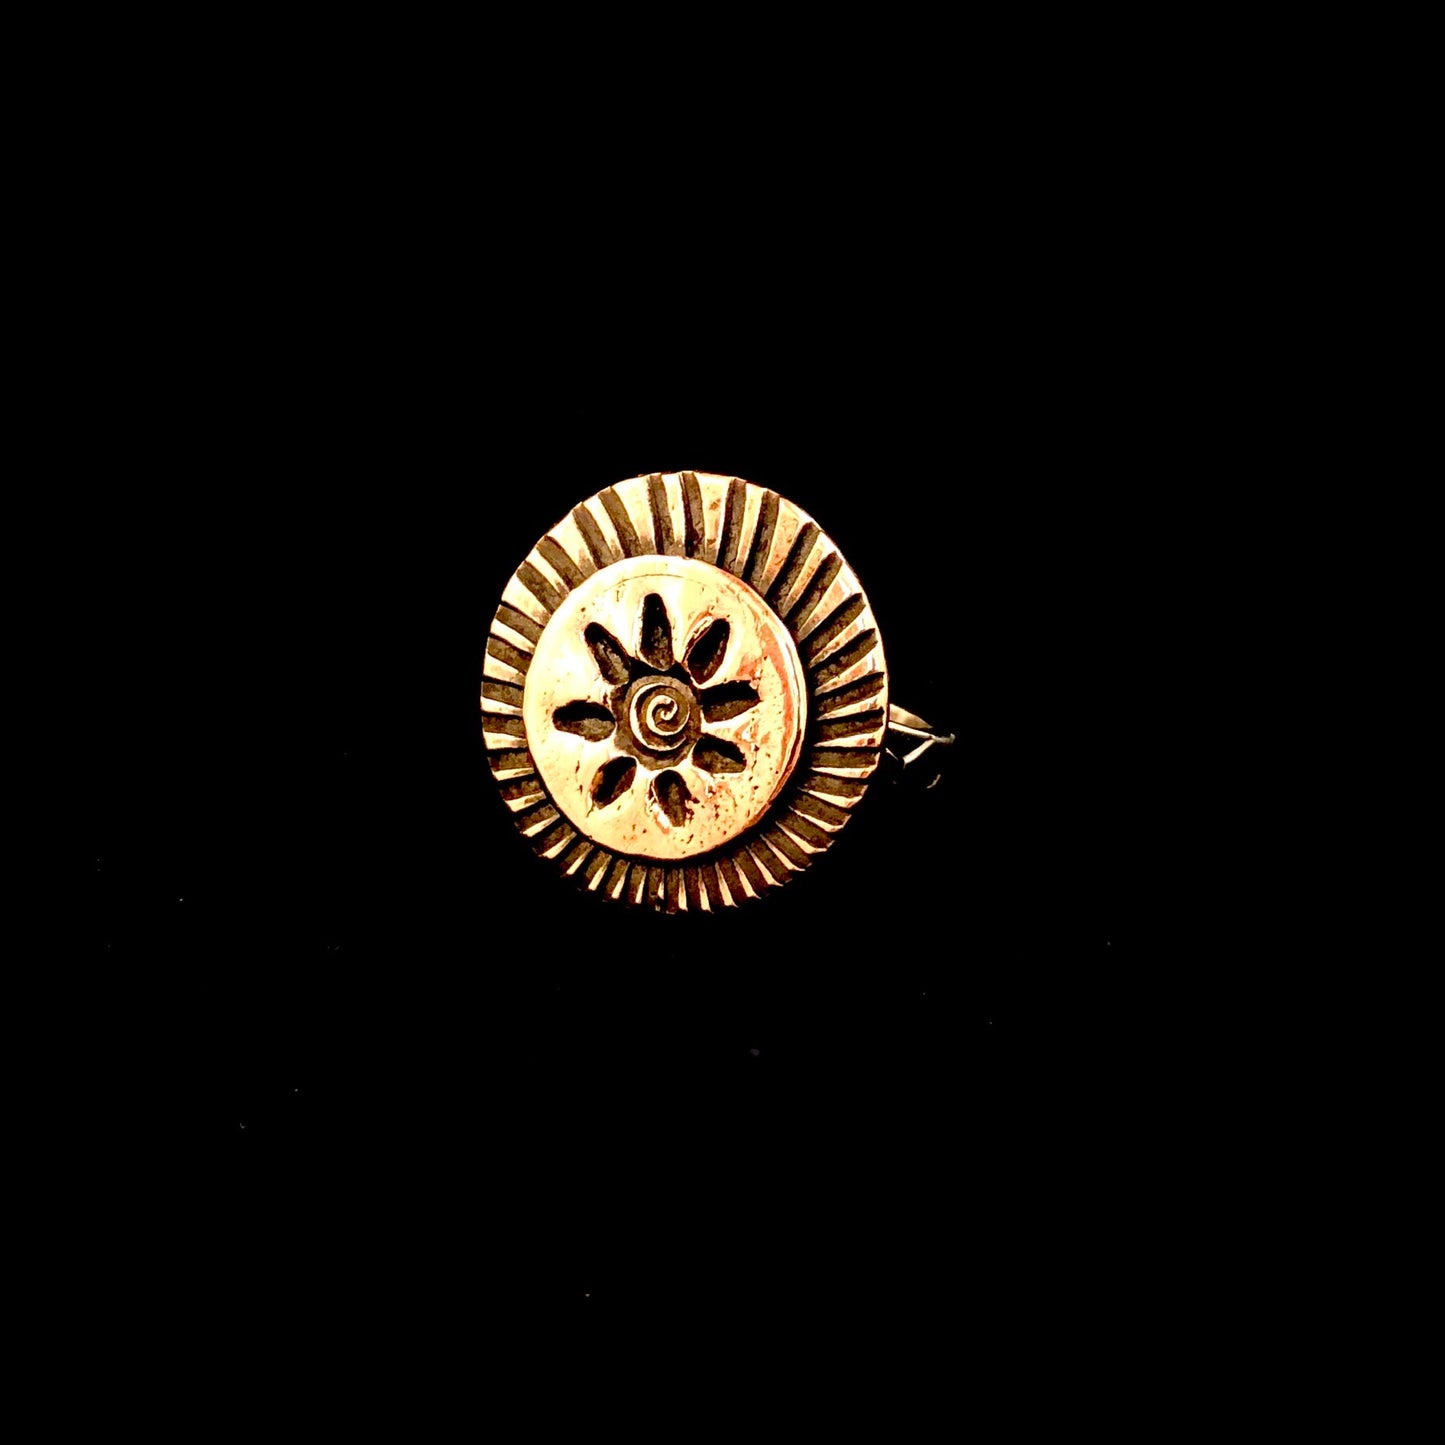 Copper Sunburst Ring-size 7.5